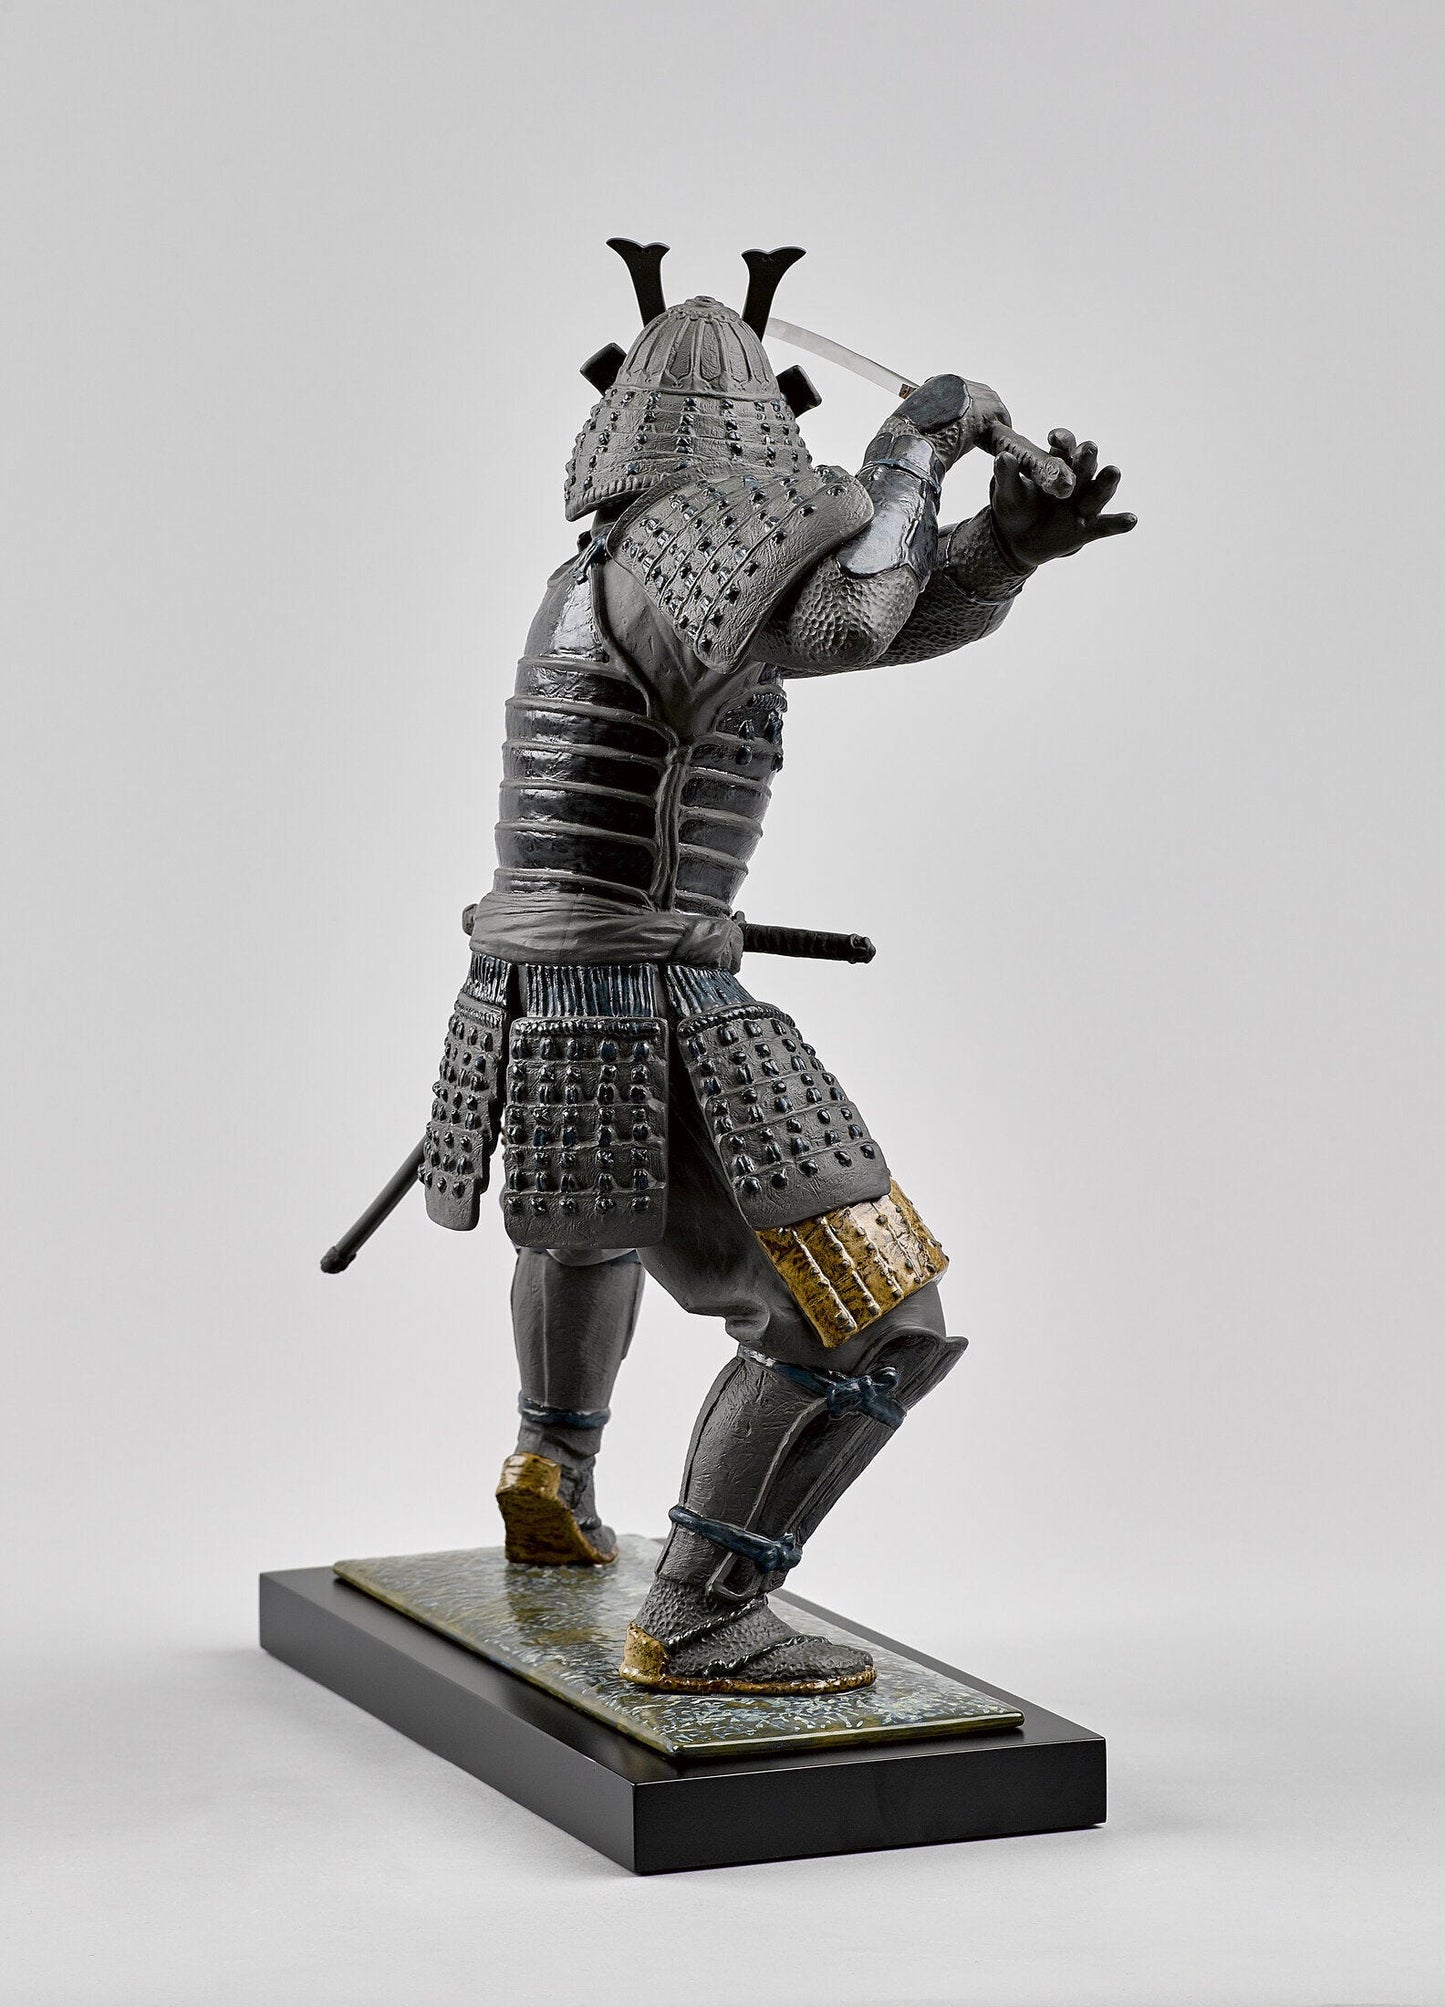 Samurai Warrior Figurine